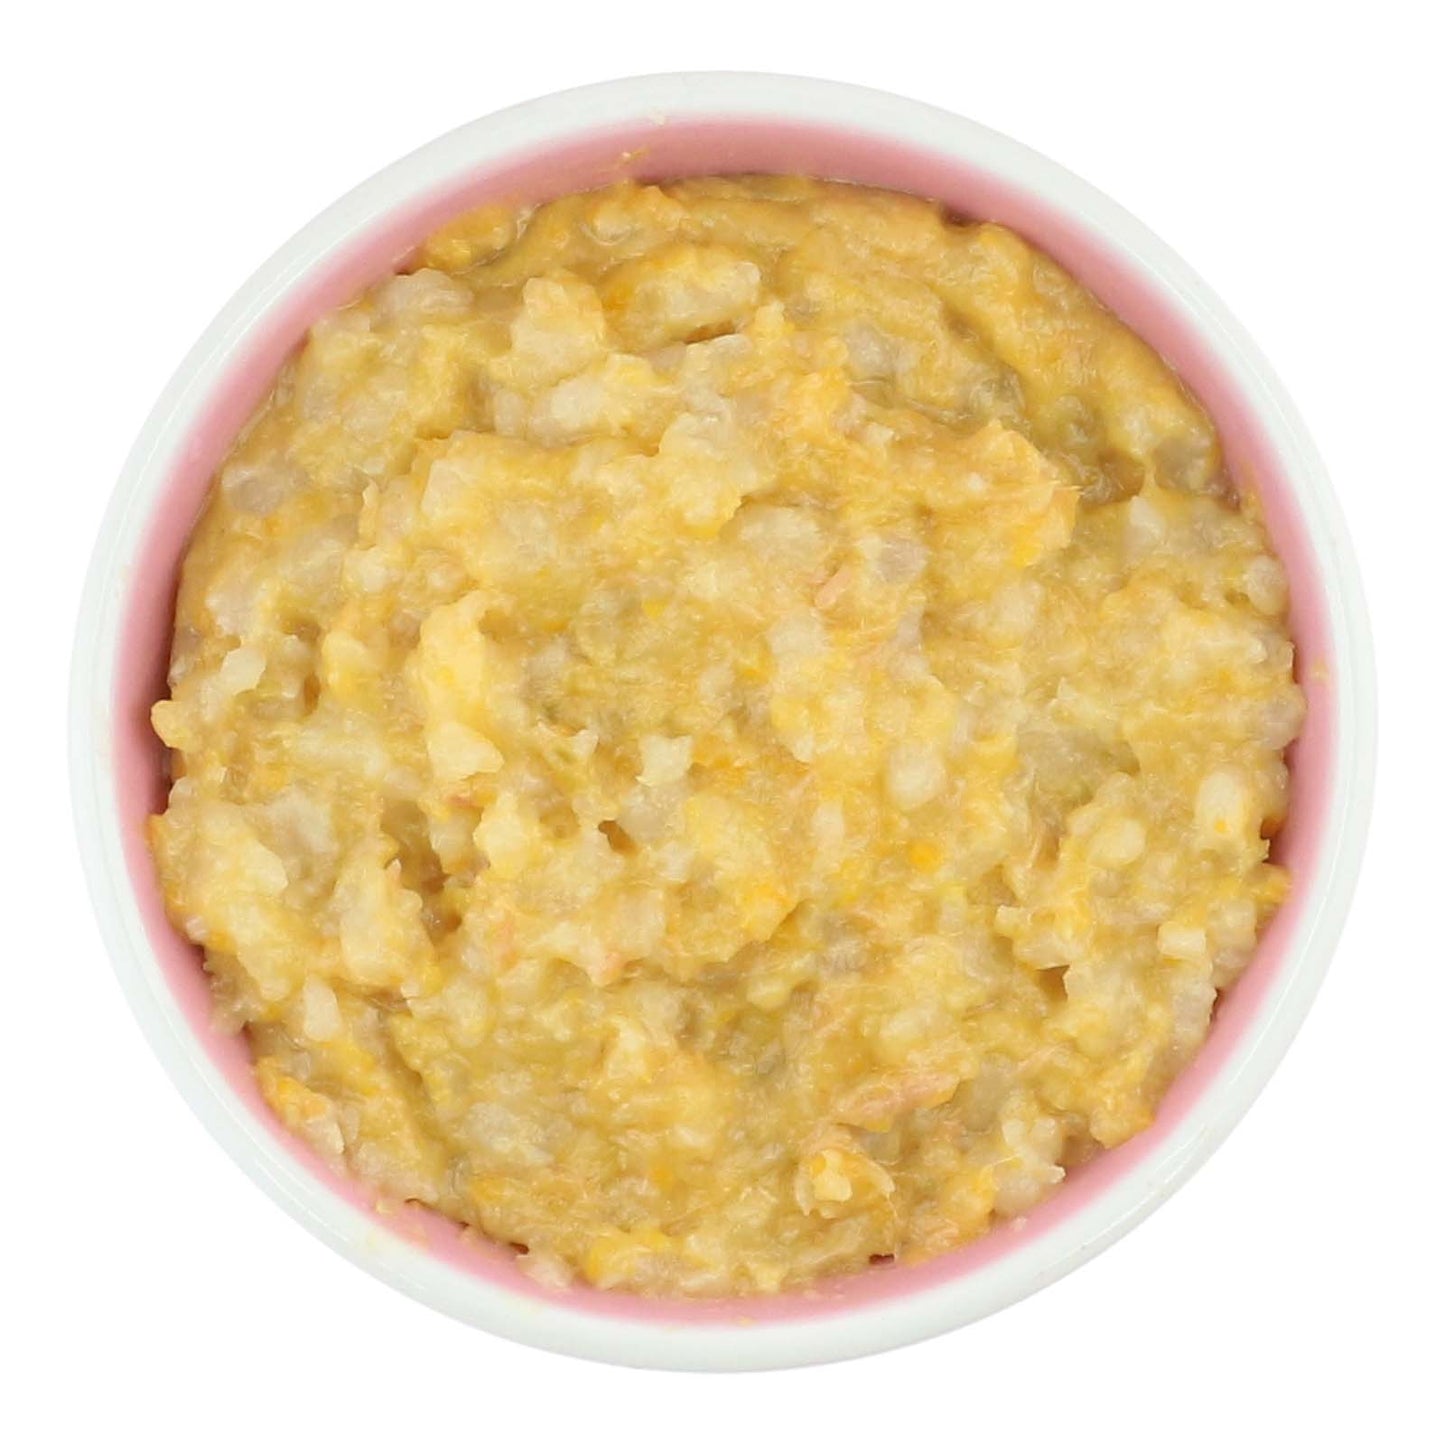 Eusik  - 8-Pk Baby Rice Porridge (Tuna, Pumpkin & French Bean) 145g, 10mths+